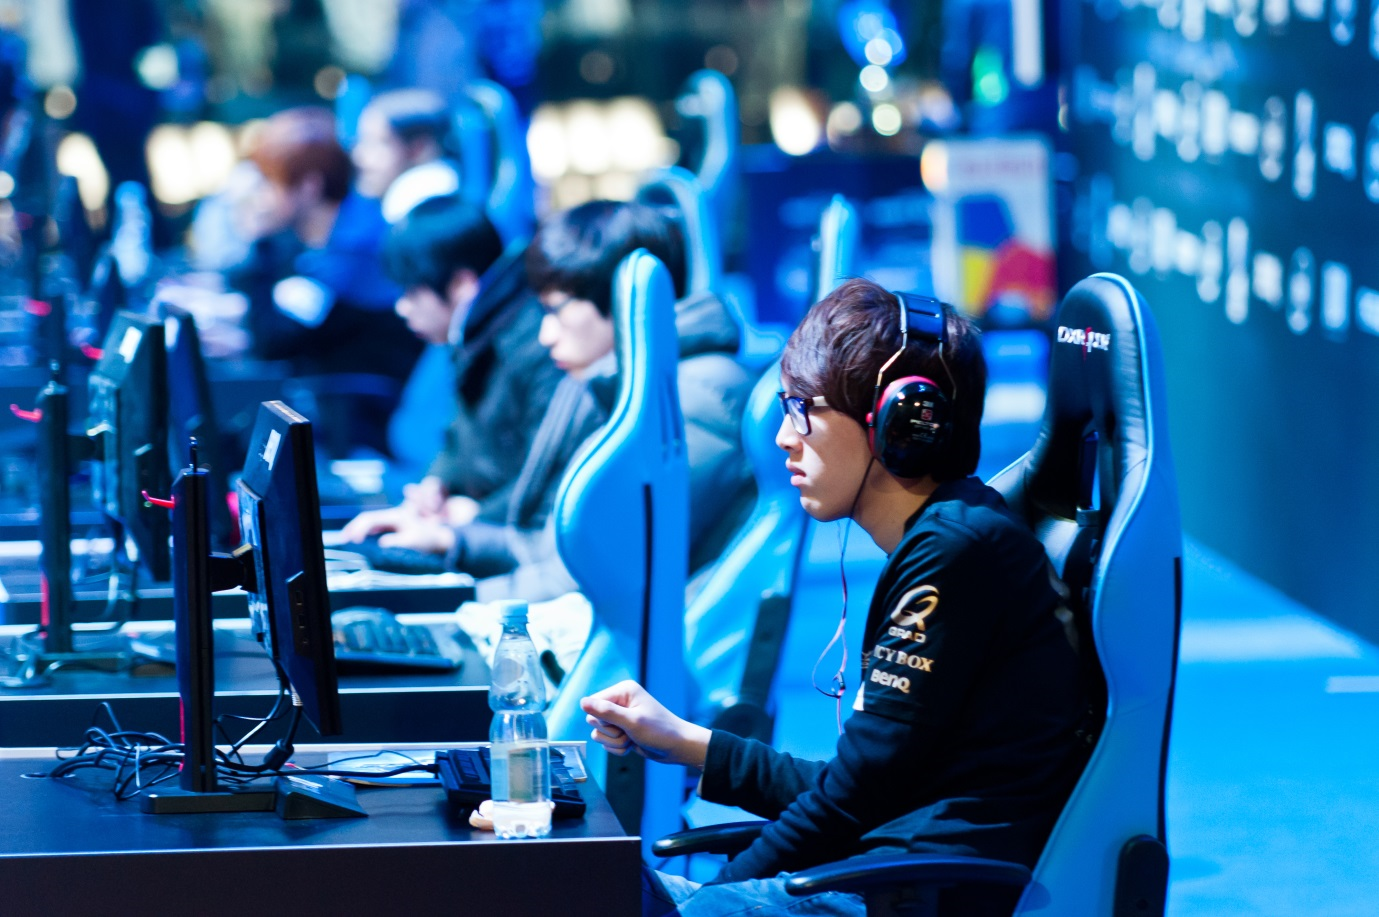 KoreaS Online Gaming Empire